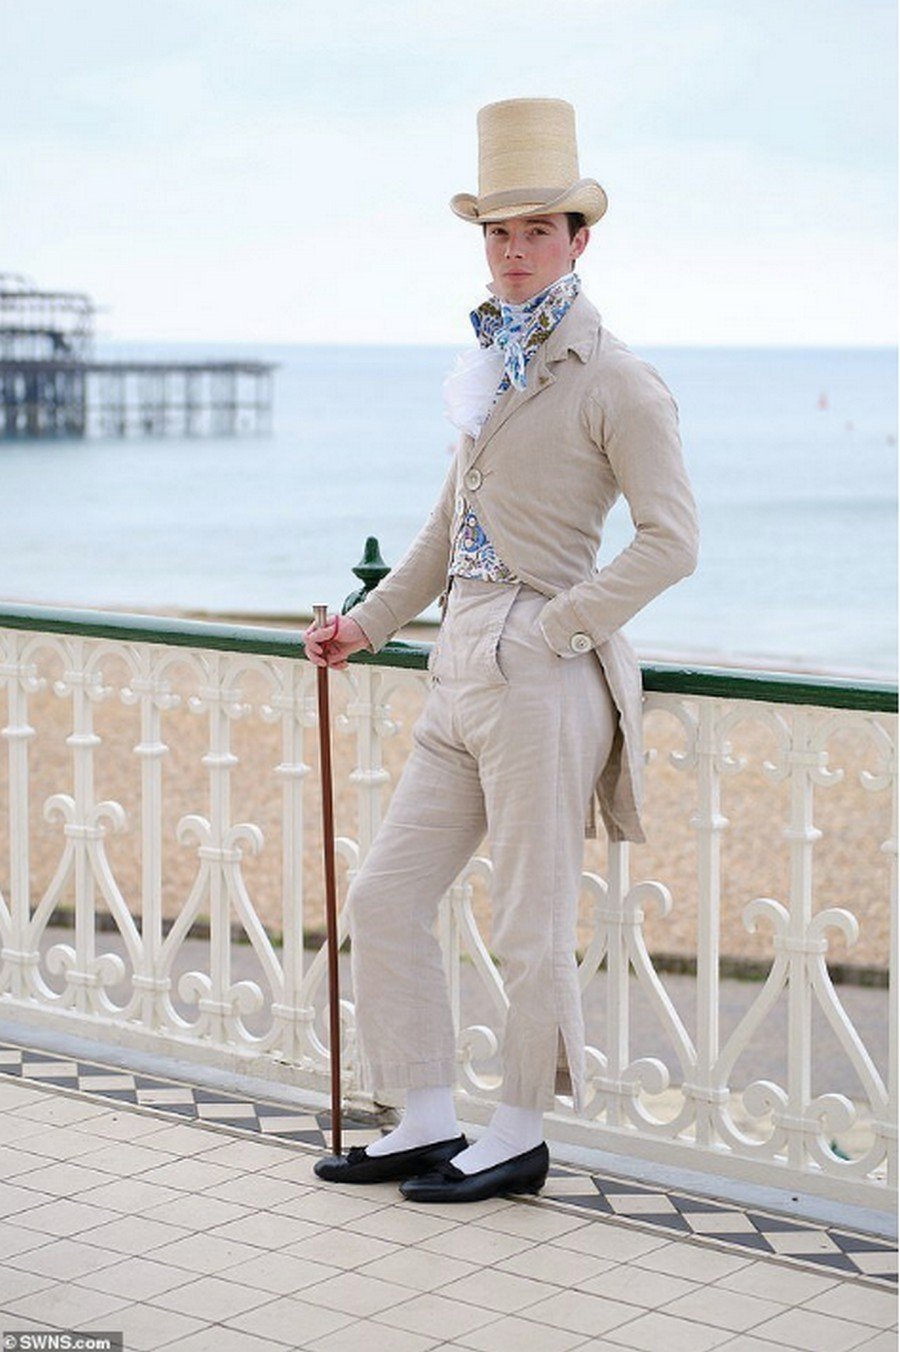 19 июля мужчина. Денди Лондонский. Стиль Лондонский Денди 19 век. Одежда Денди 19 века. Денди мода 19 век.